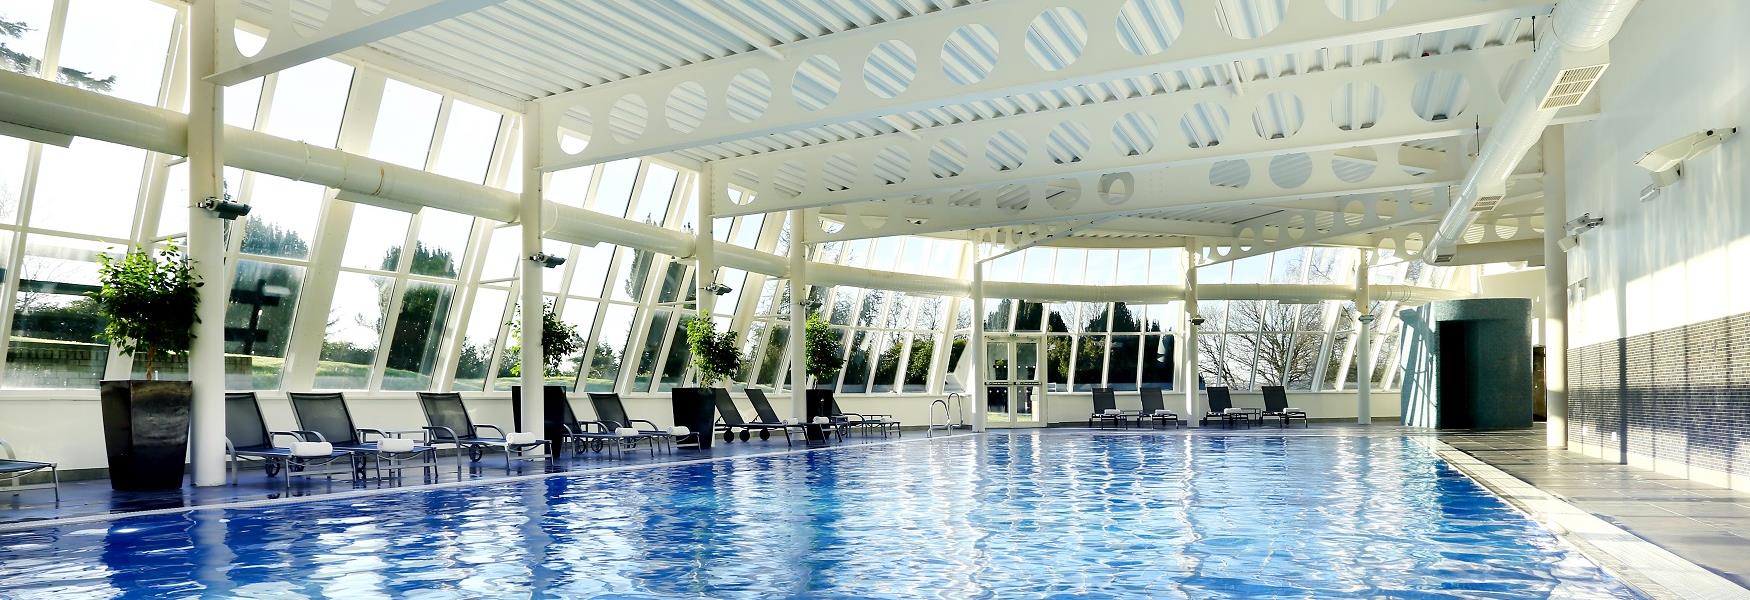 Enjoy a few lengths in our 18 metre pool at Portal Hotel, Golf & Spa.